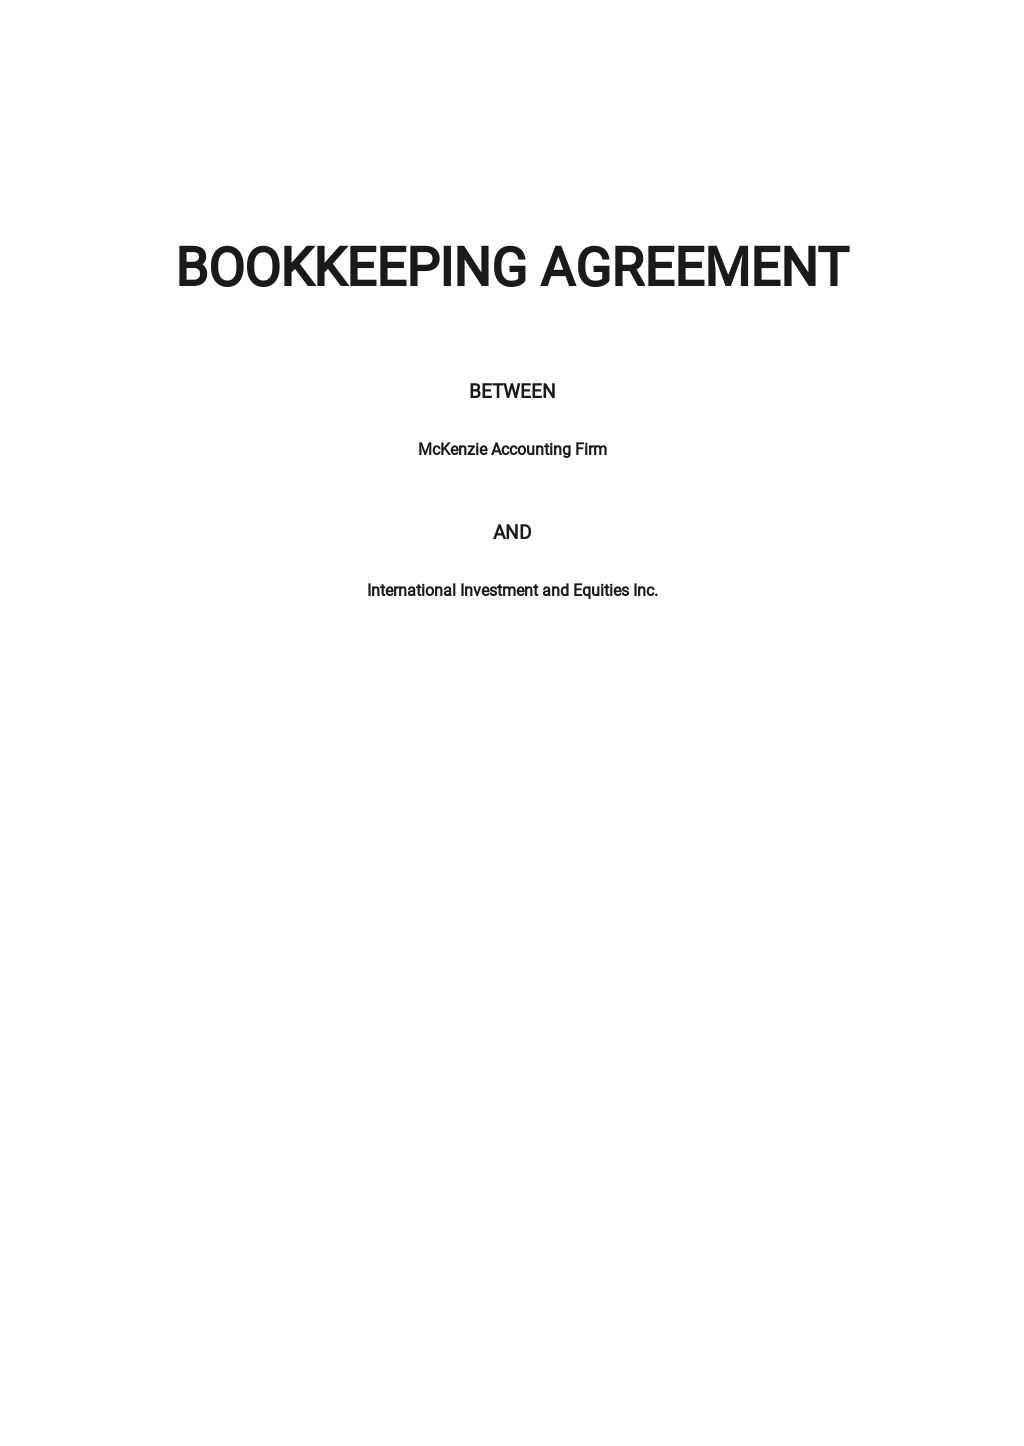 Bookkeeping Agreement Template.jpe